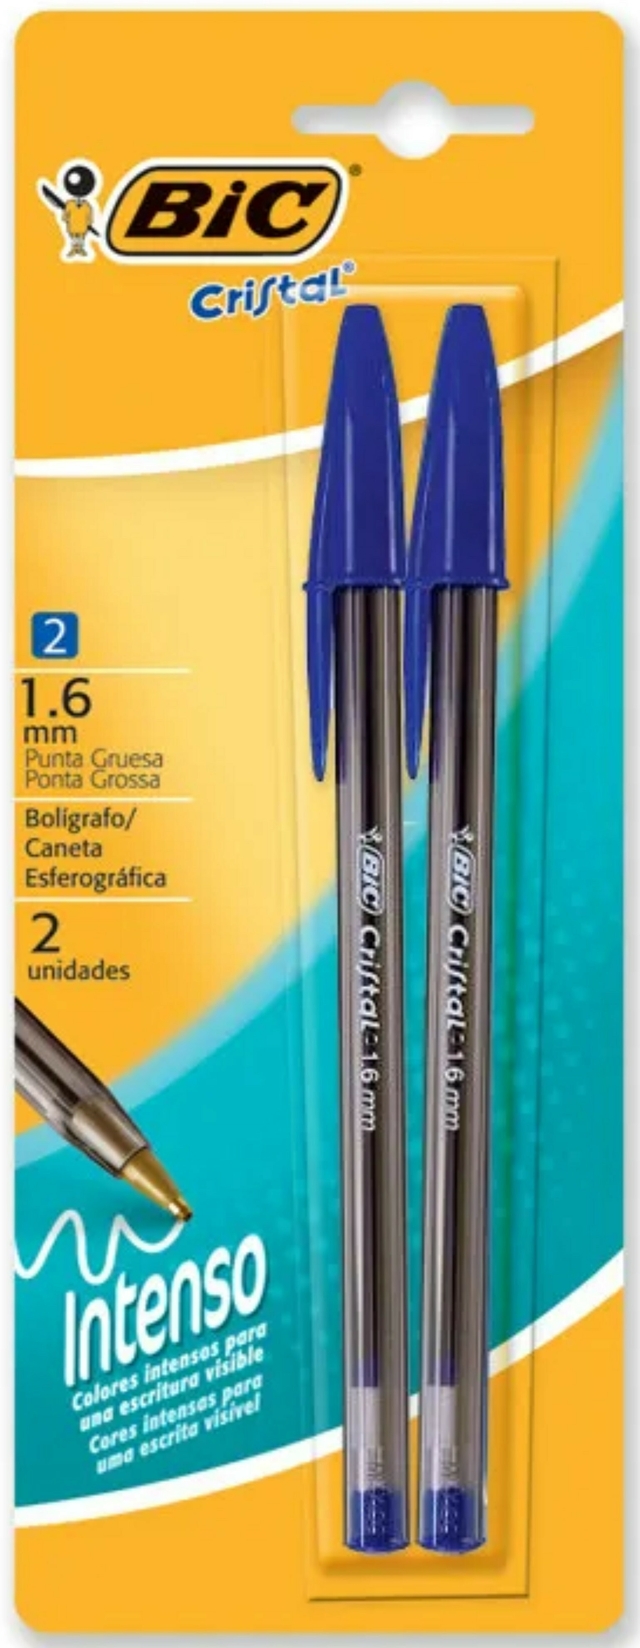 Bolsa 15 bolígrafos de colores BIC cristal